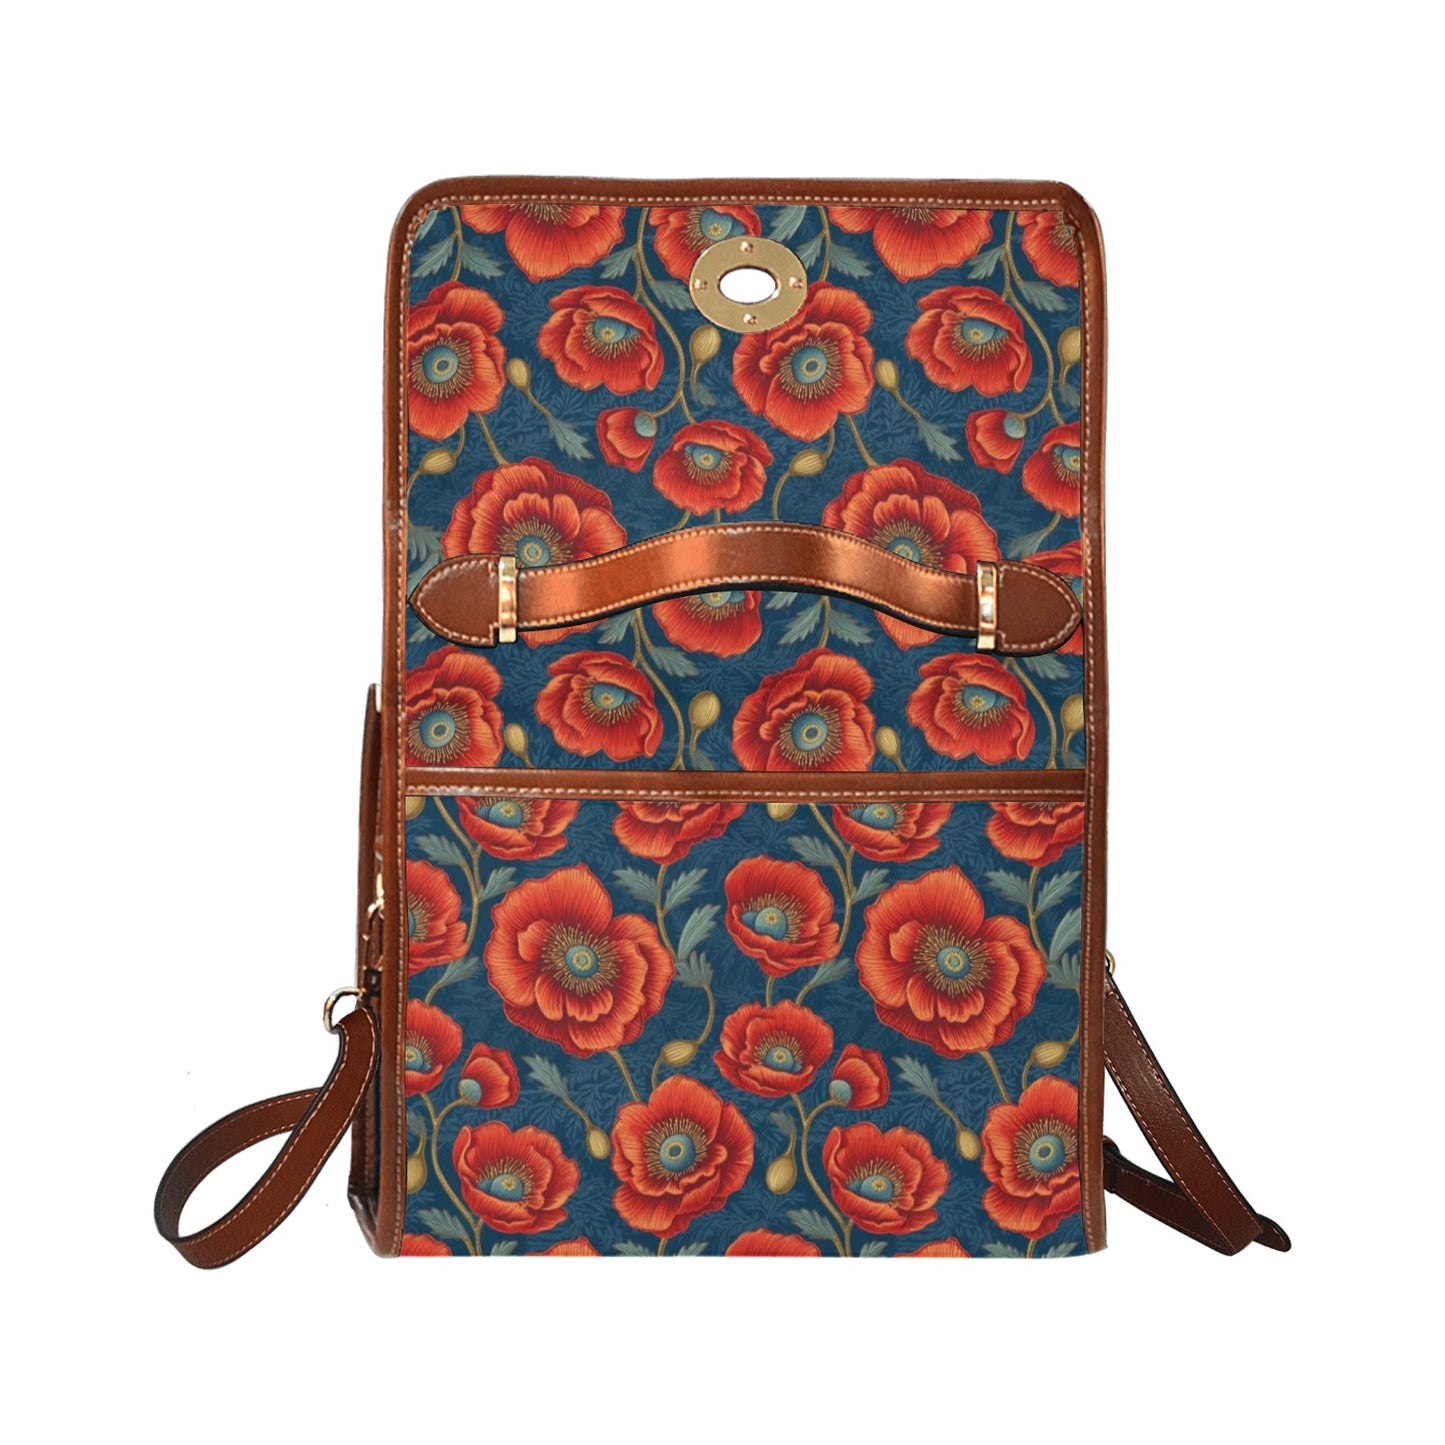 California Poppy Canvas Satchel Purse bag, Red Flowers Floral Waterproof Small Brown Cute Women Crossed Body Vegan Leather Strap Handbag